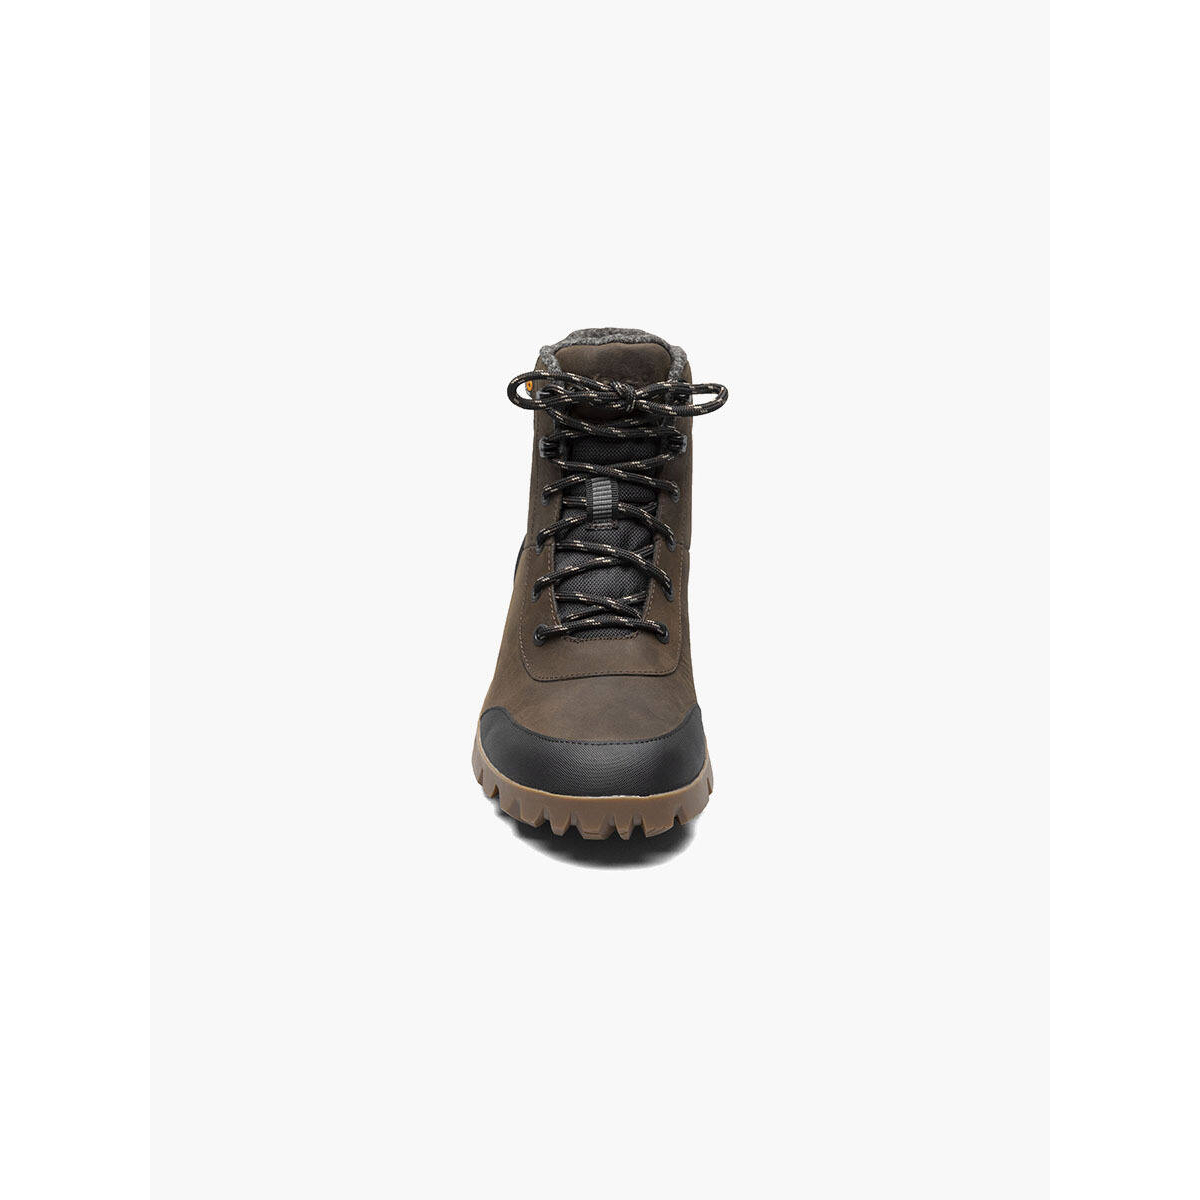 BOGS Men's Arcata Urban Leather Mid Winter Boots Chocolate - 72909-202 CHOCOLATE - CHOCOLATE, 11-M